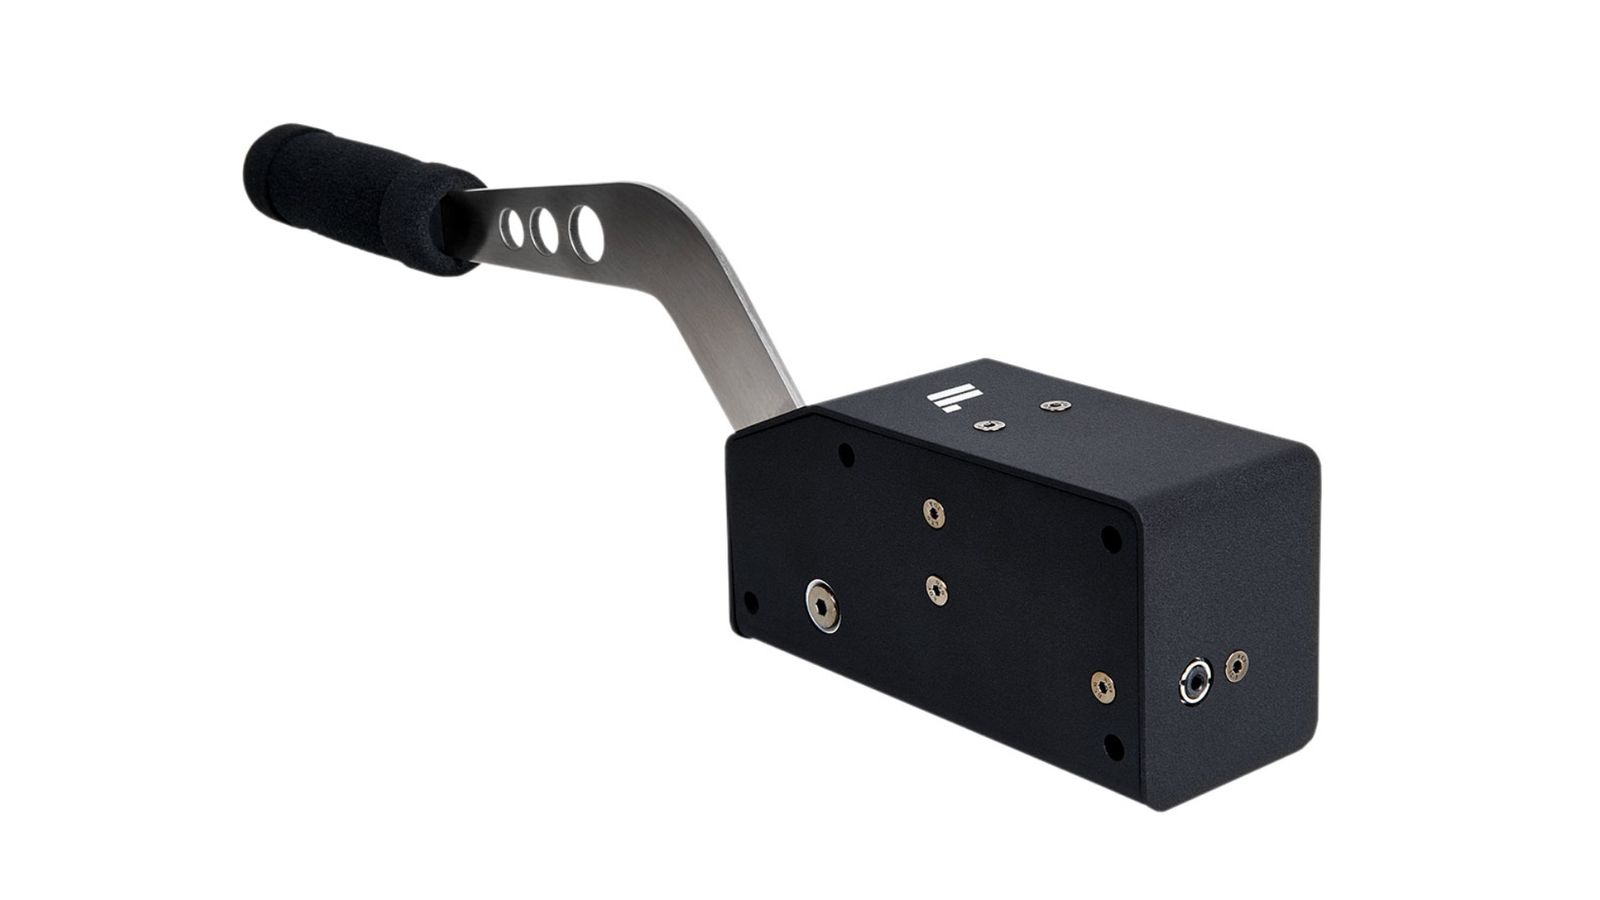 Fanatec ClubSport Handbrake V1.5 product image of a black metal handbrake featuring a silver handle shaft.